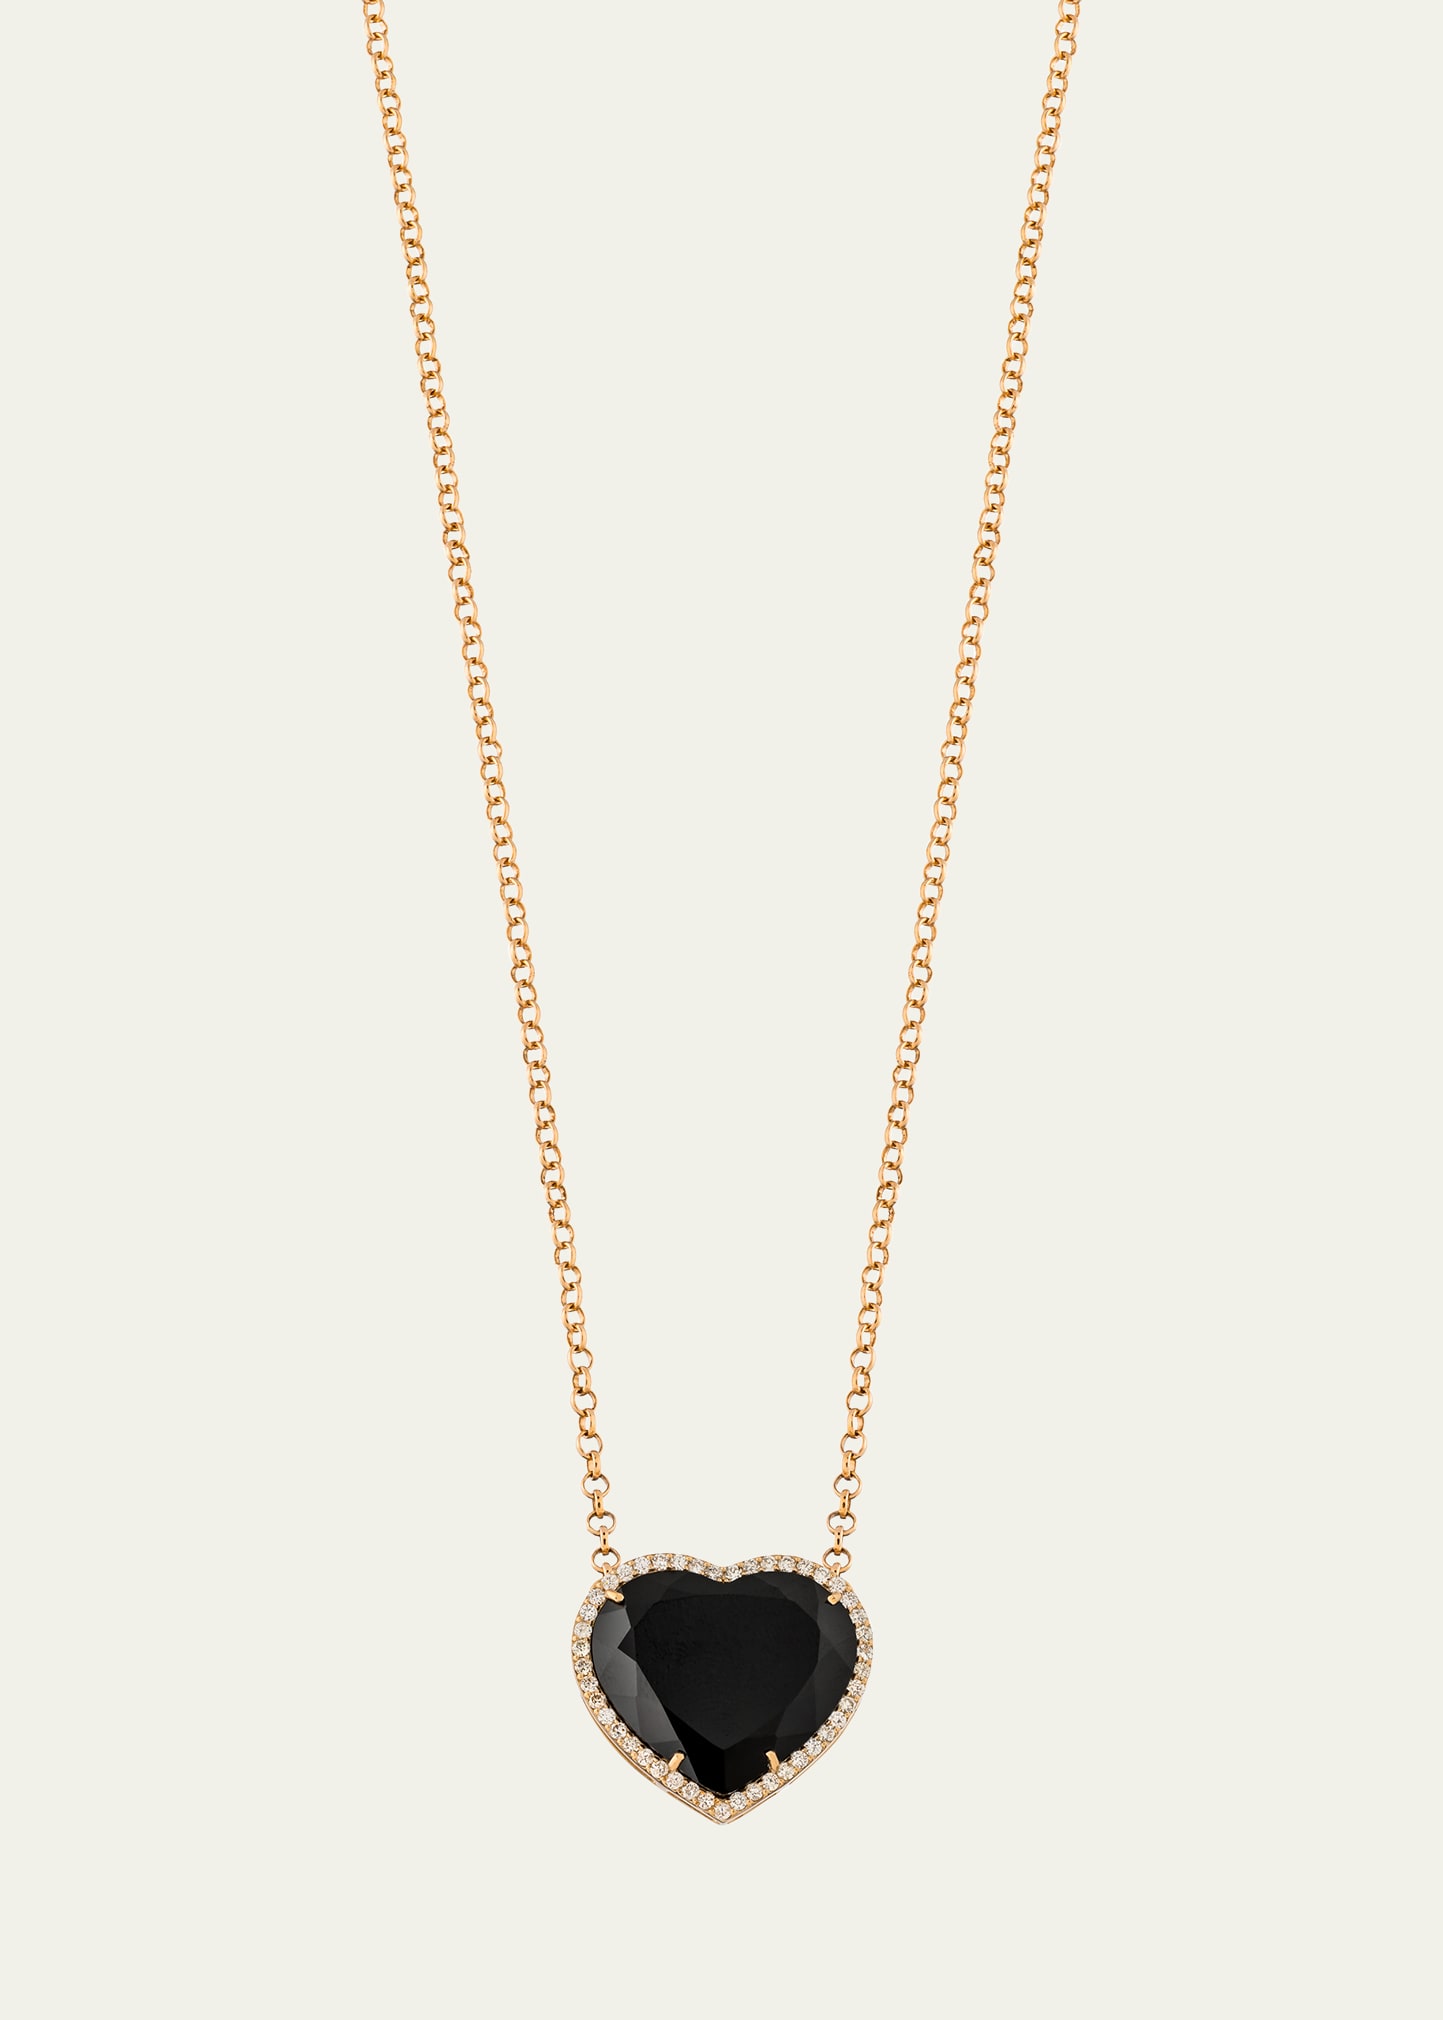 Daniella Kronfle 18k Rose Gold Medium Heart Necklace With Black Quartz And Diamonds